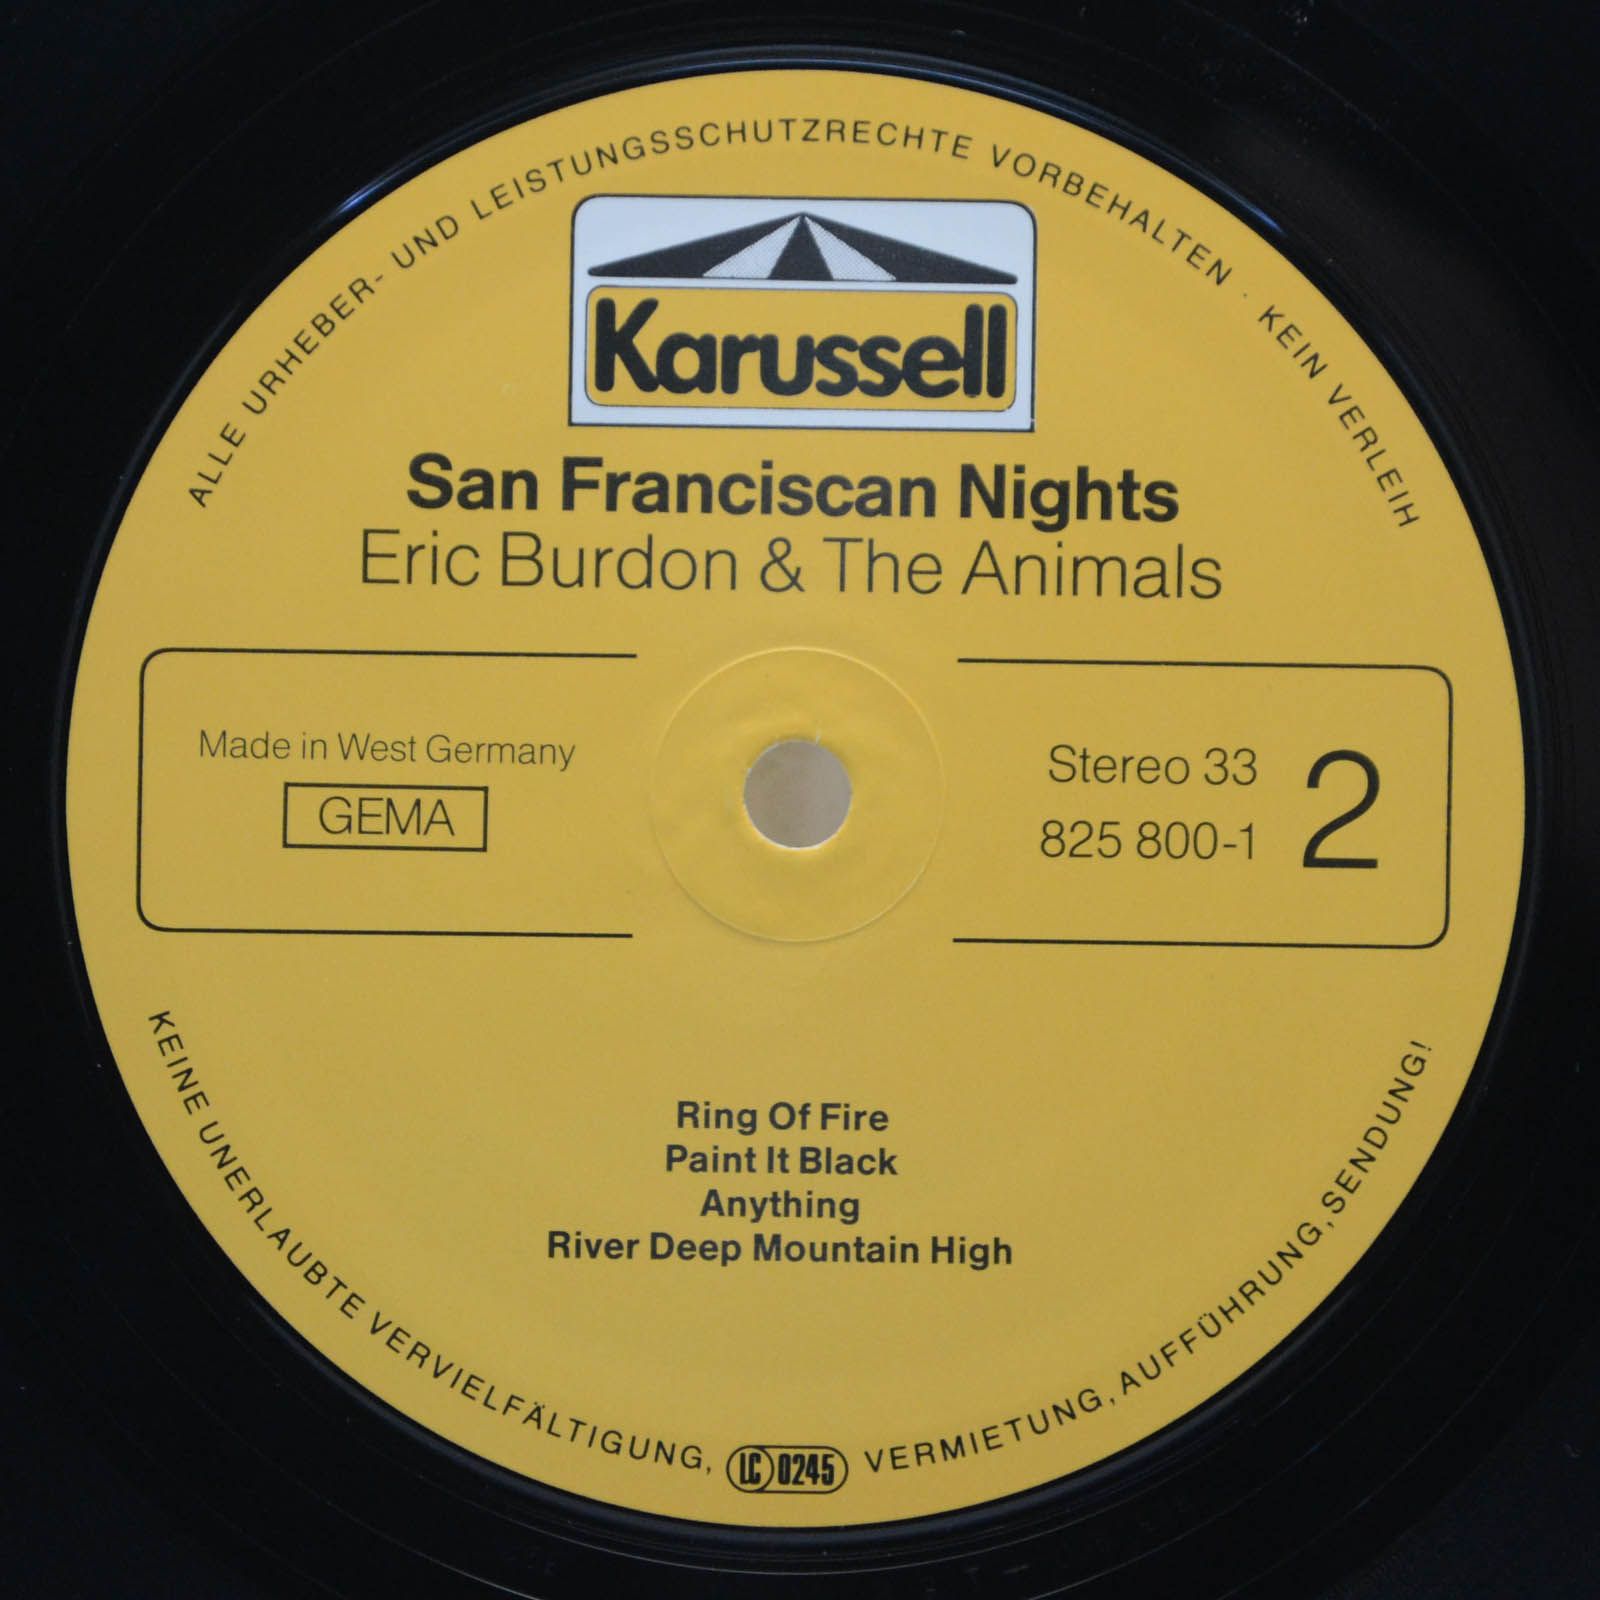 Eric Burdon & The Animals — San Franciscan Nights, 1978